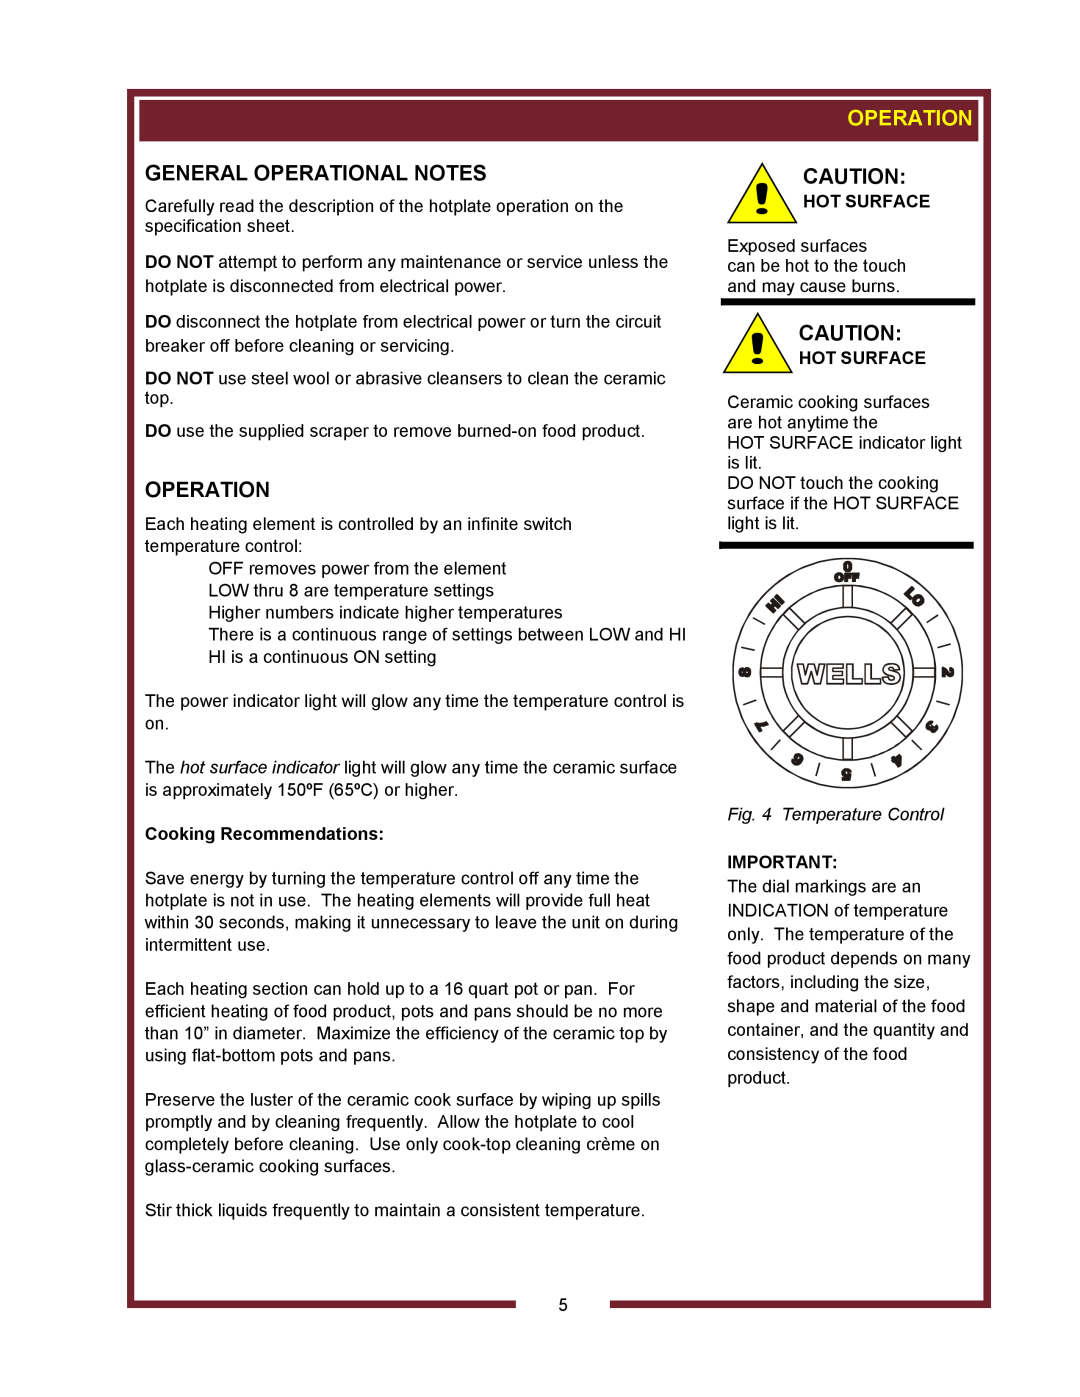 Wells HC-2256, HC-1006, HC-1256, HC2256 operation manual General Operational Notes, Temperature Control 